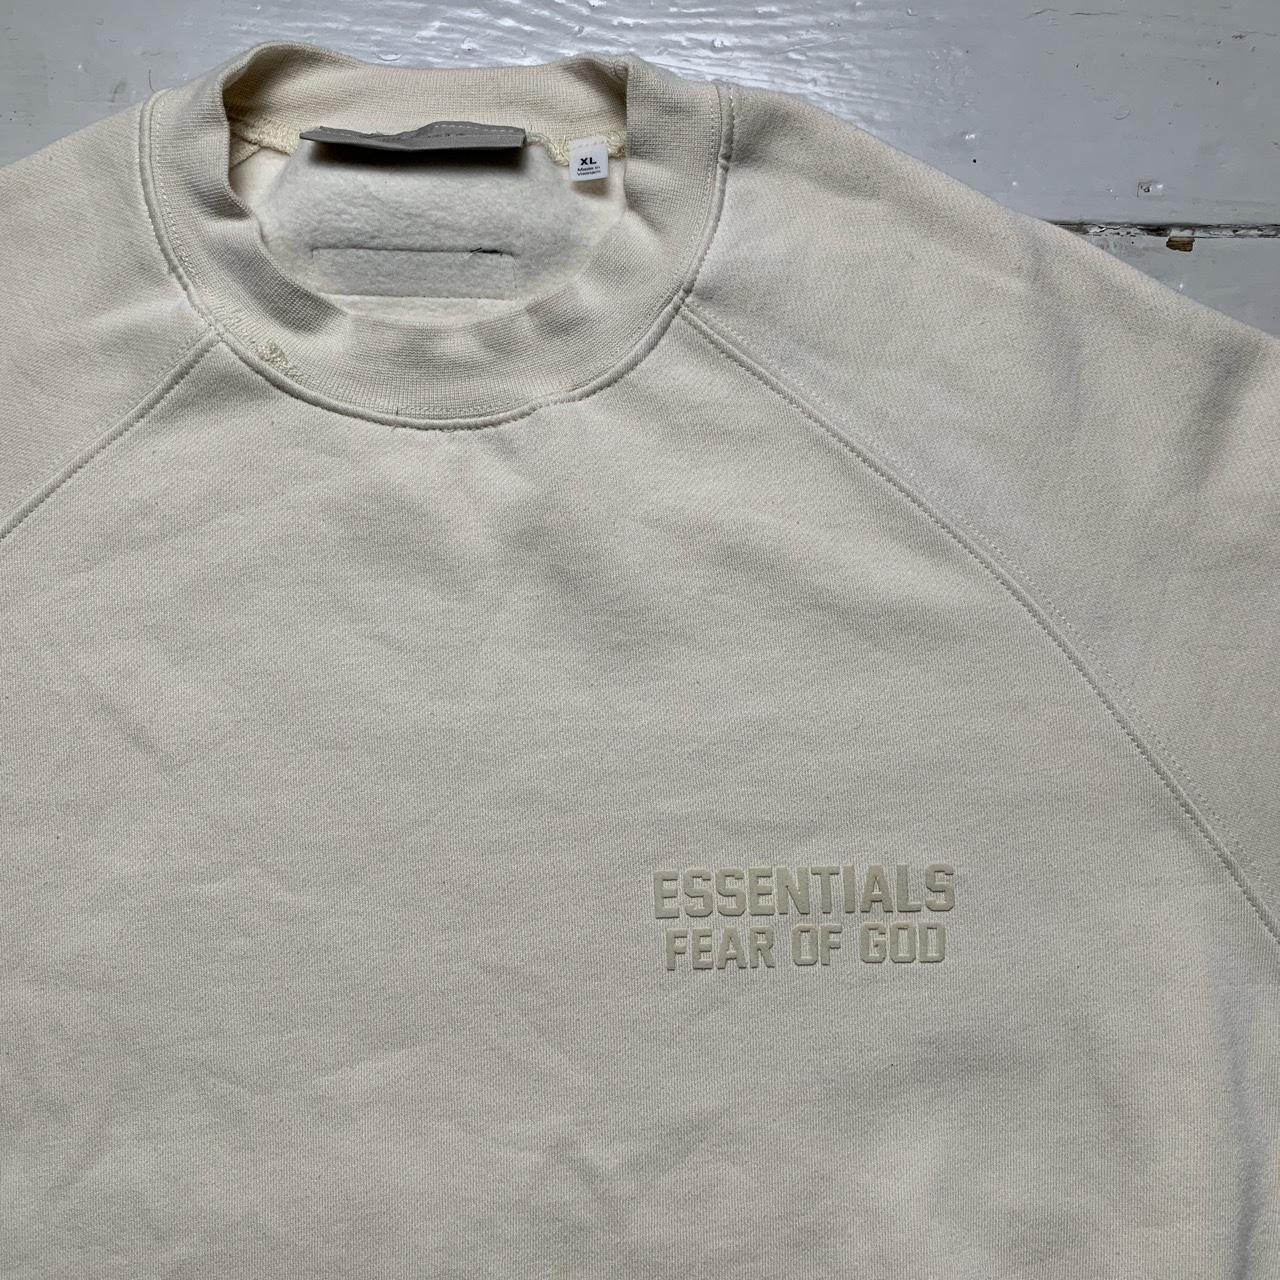 Fear Of God Essentials Cream Oversized Jumper